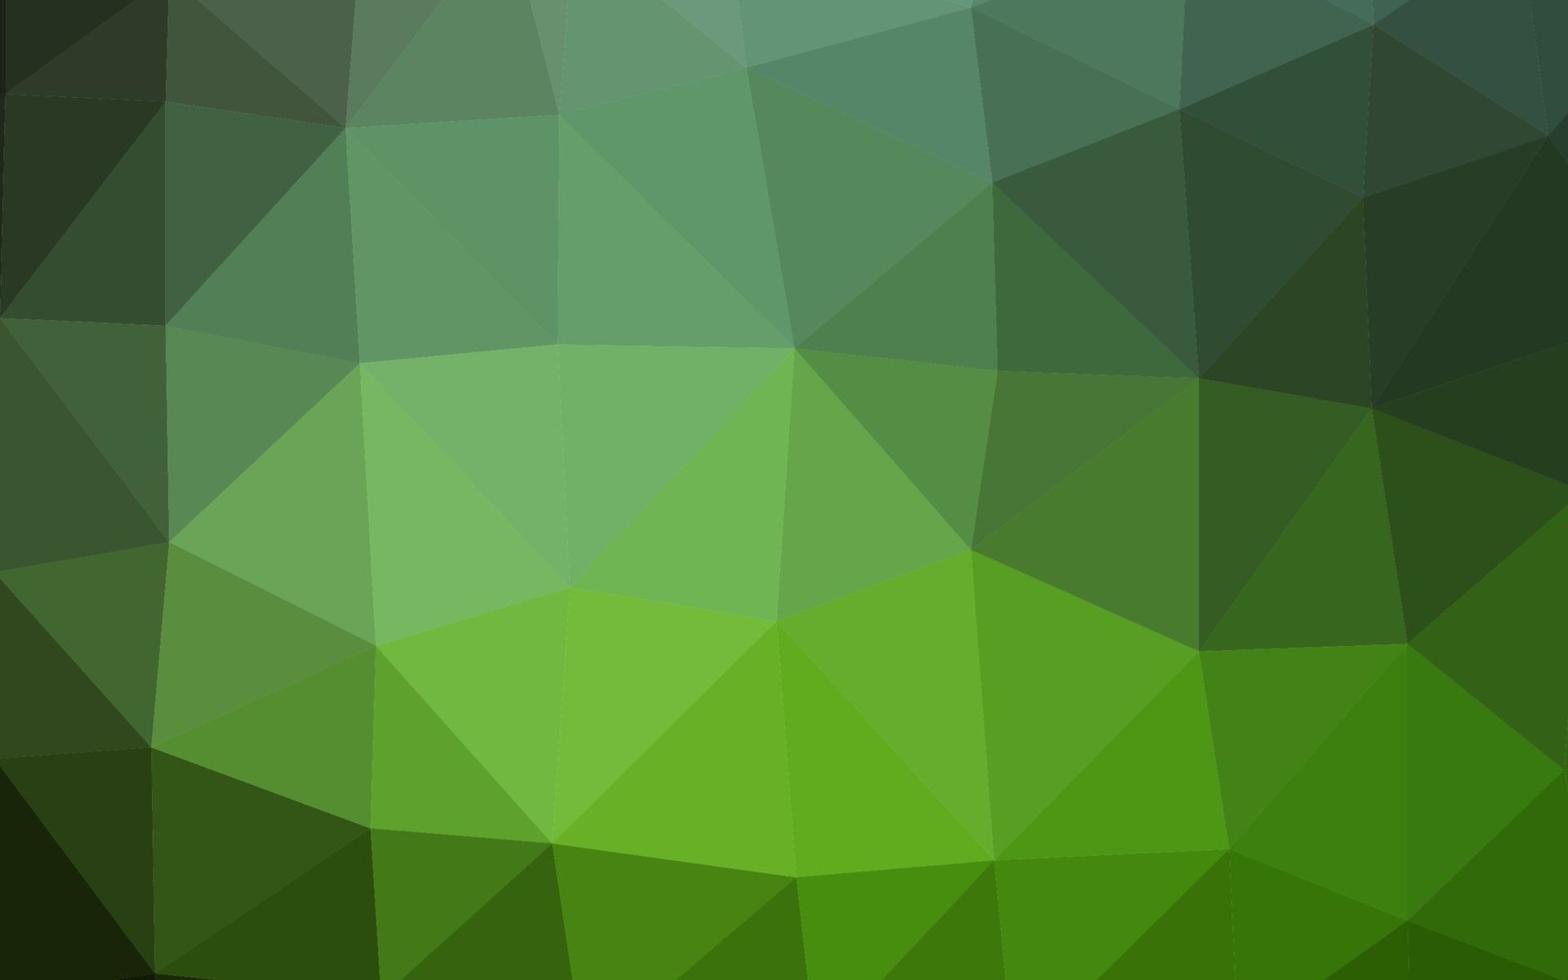 Dark Green vector shining triangular template.